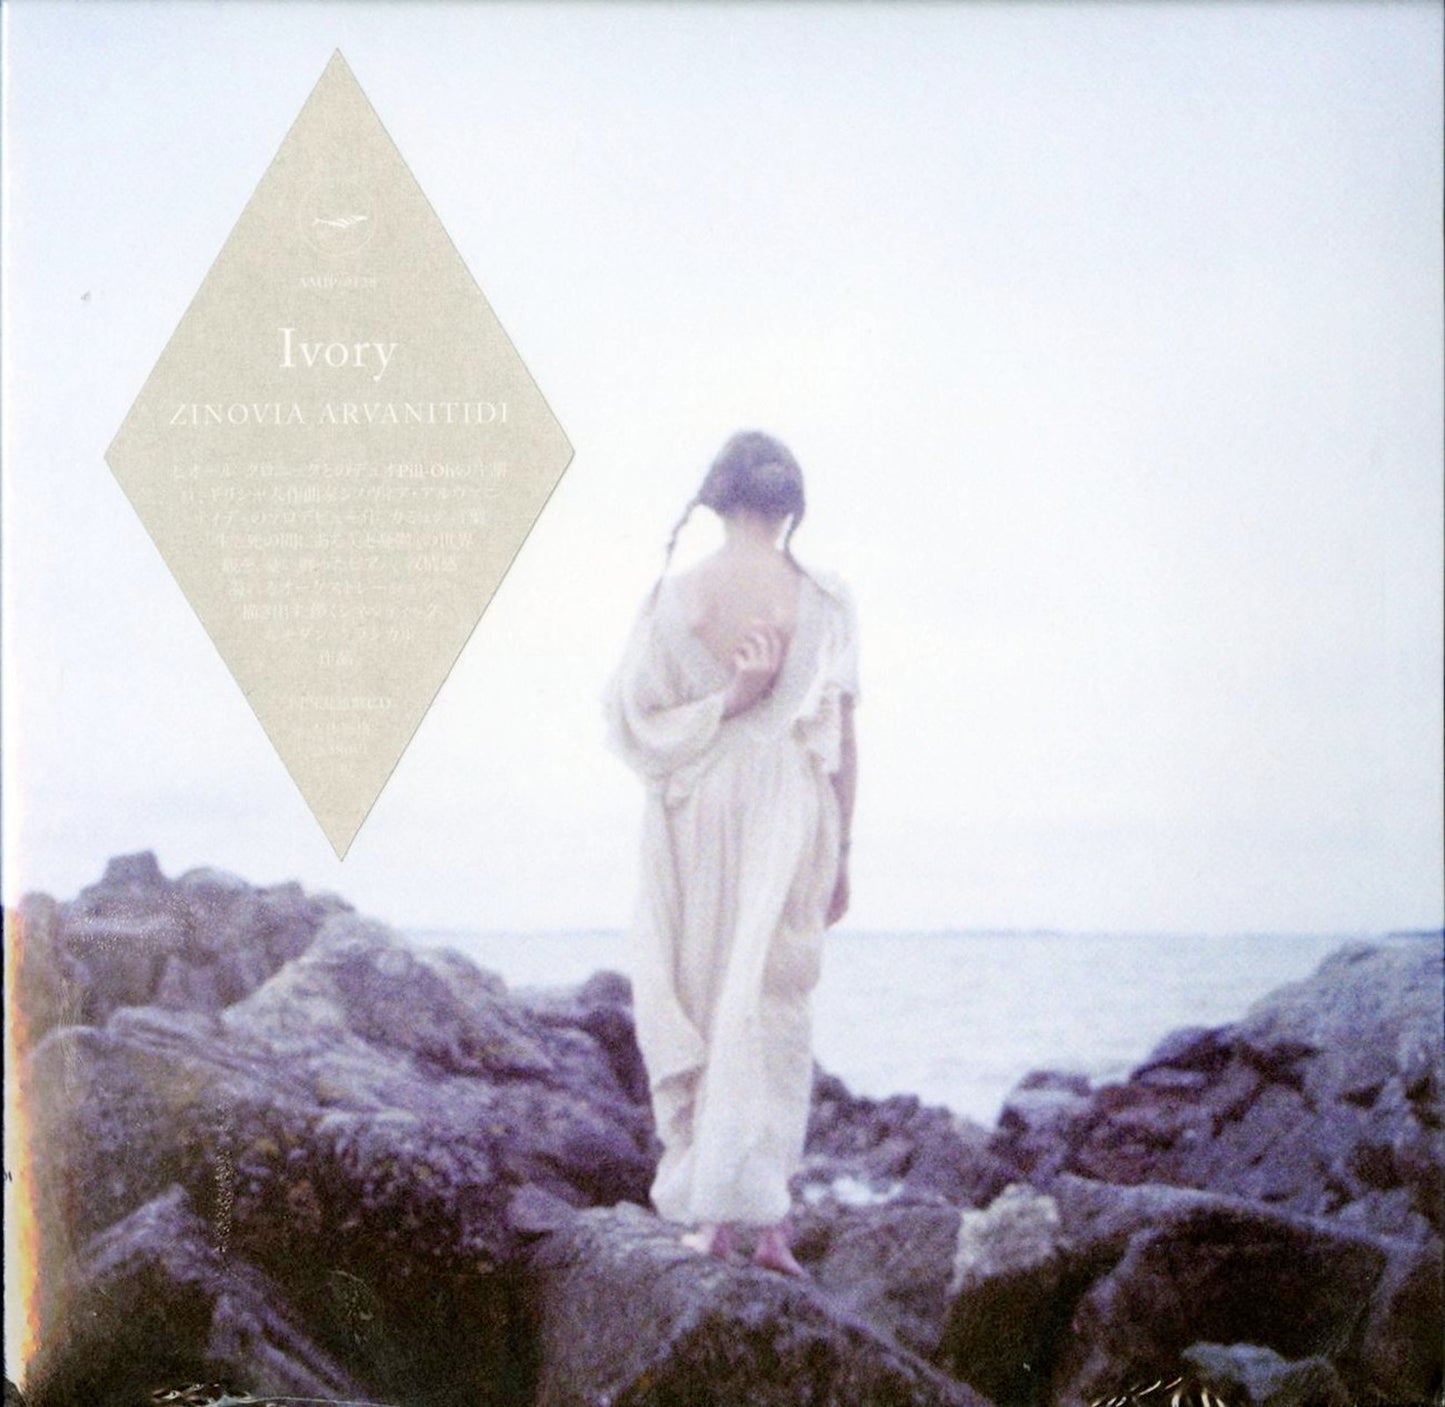 Zinovia Arvanitidi - Ivory - Japan CD